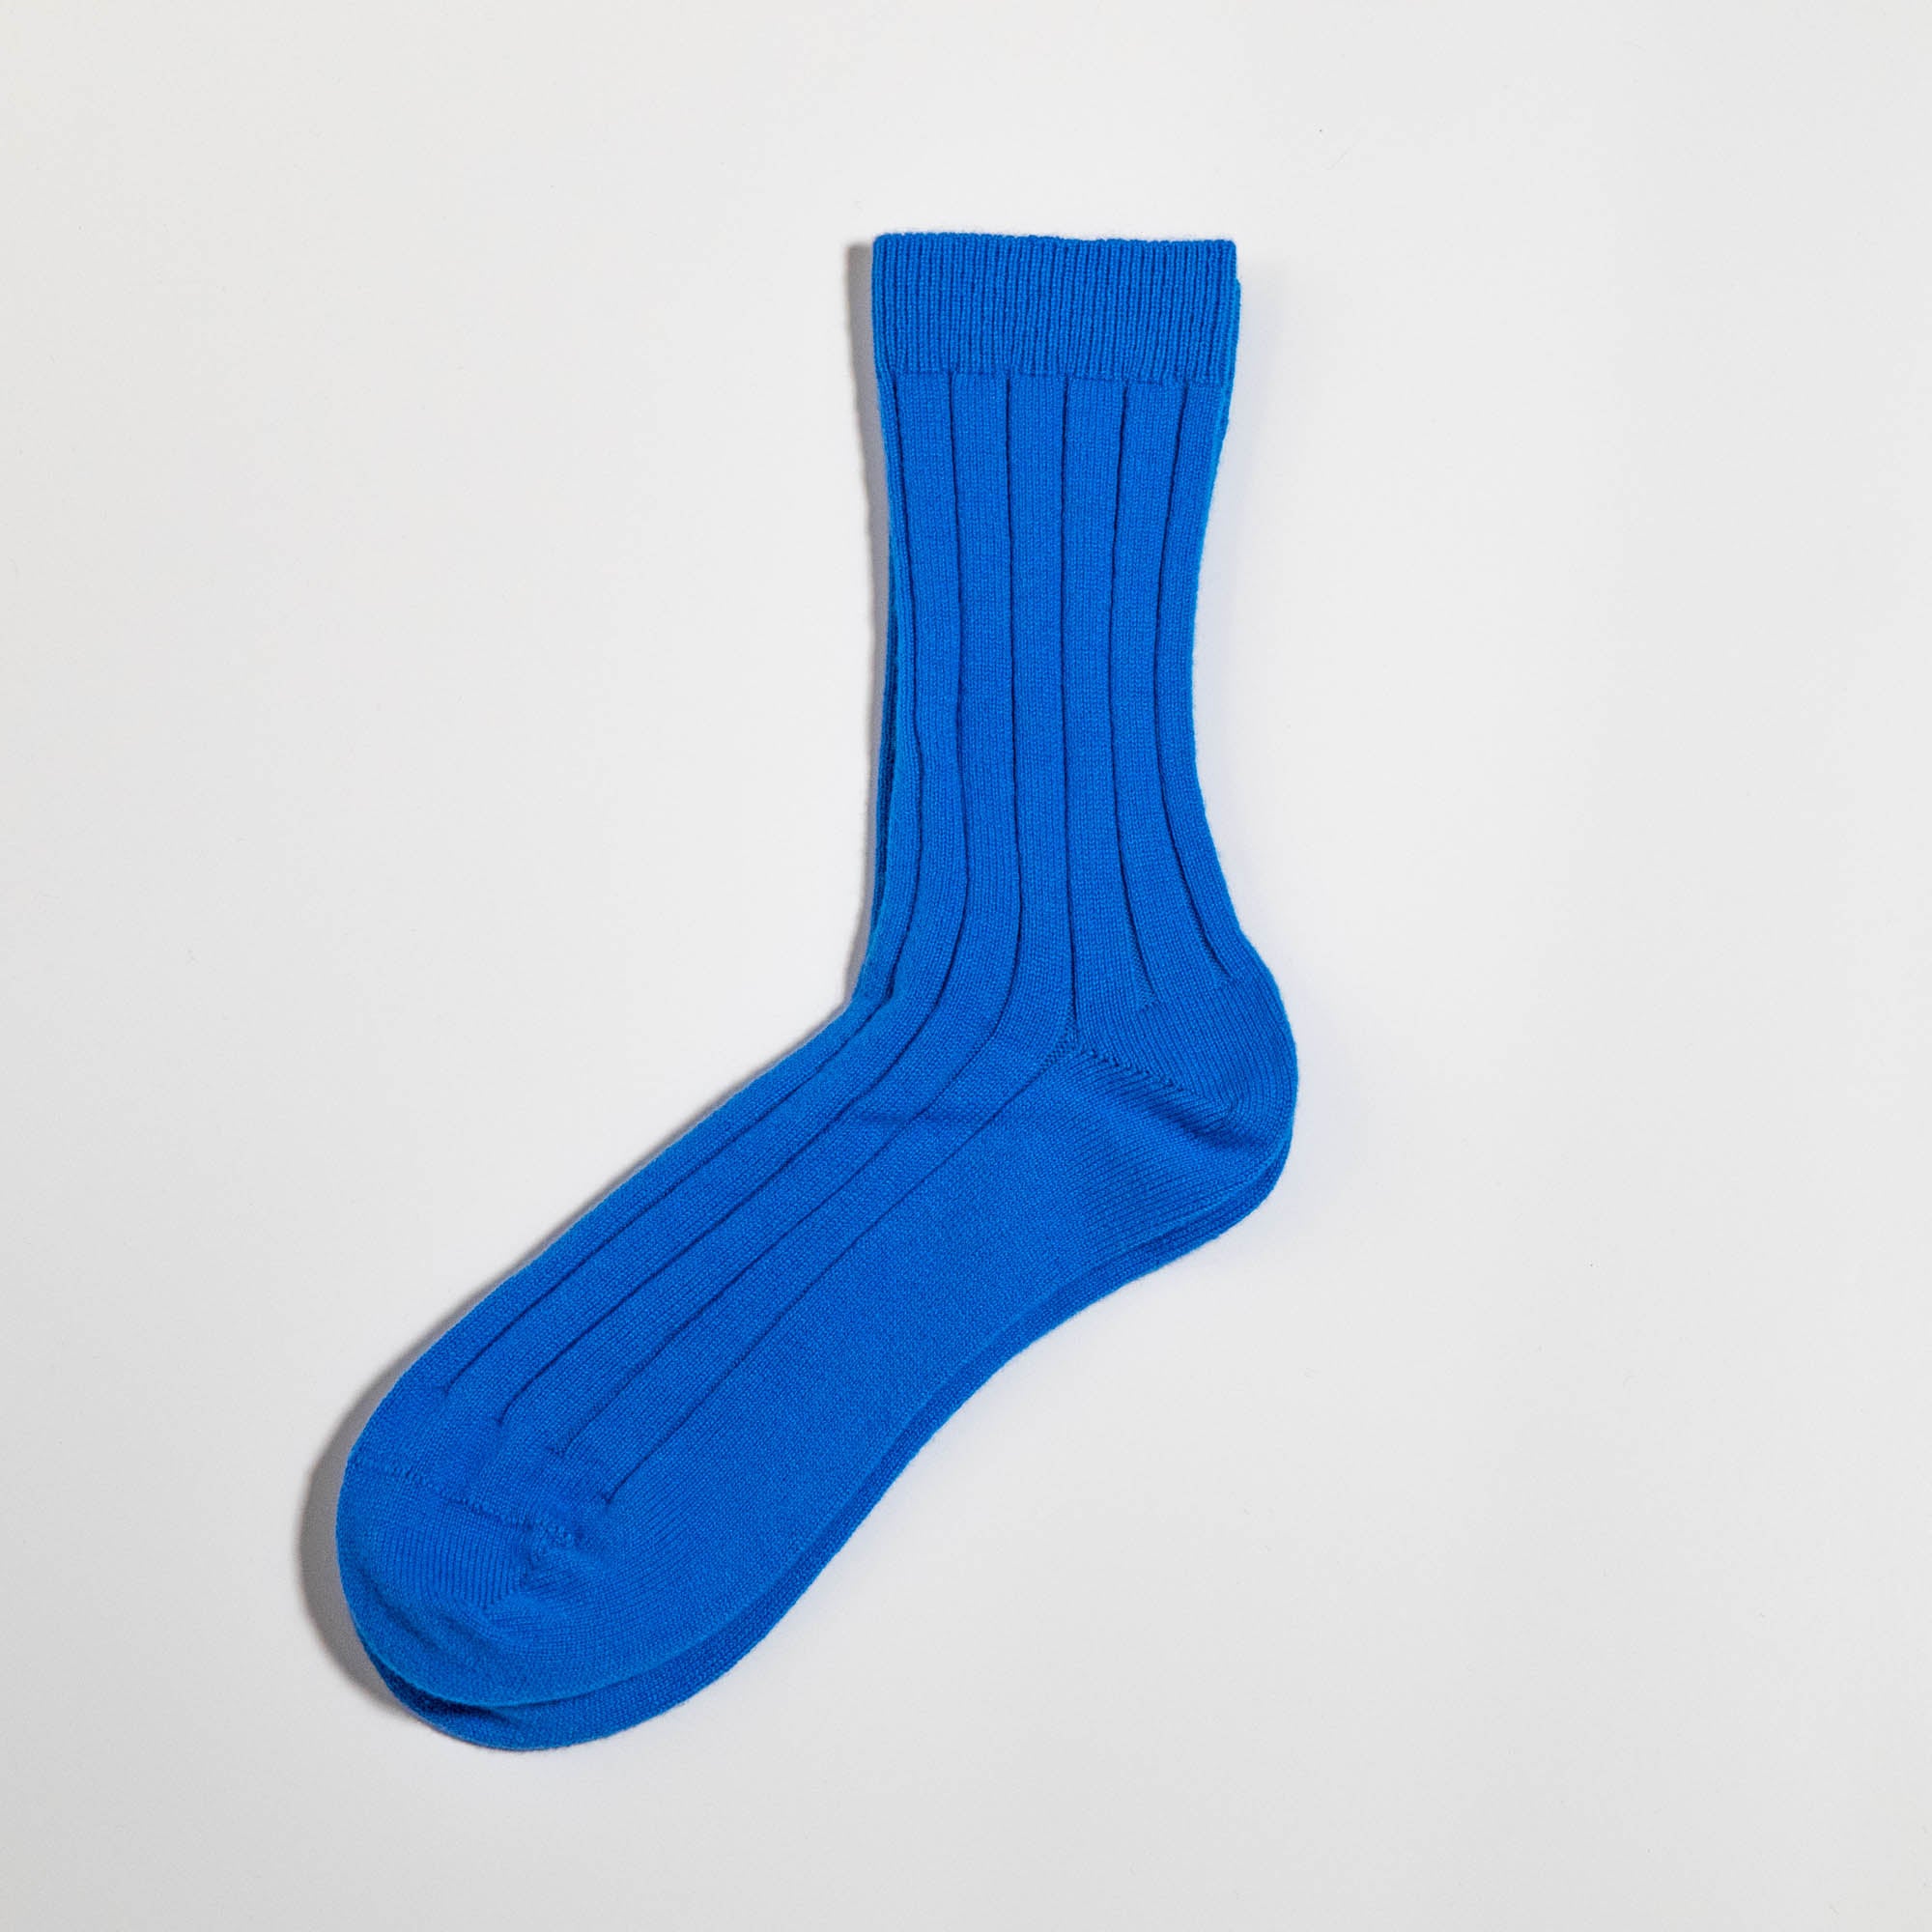 sea blue cashmere mens socks, made in Scotland